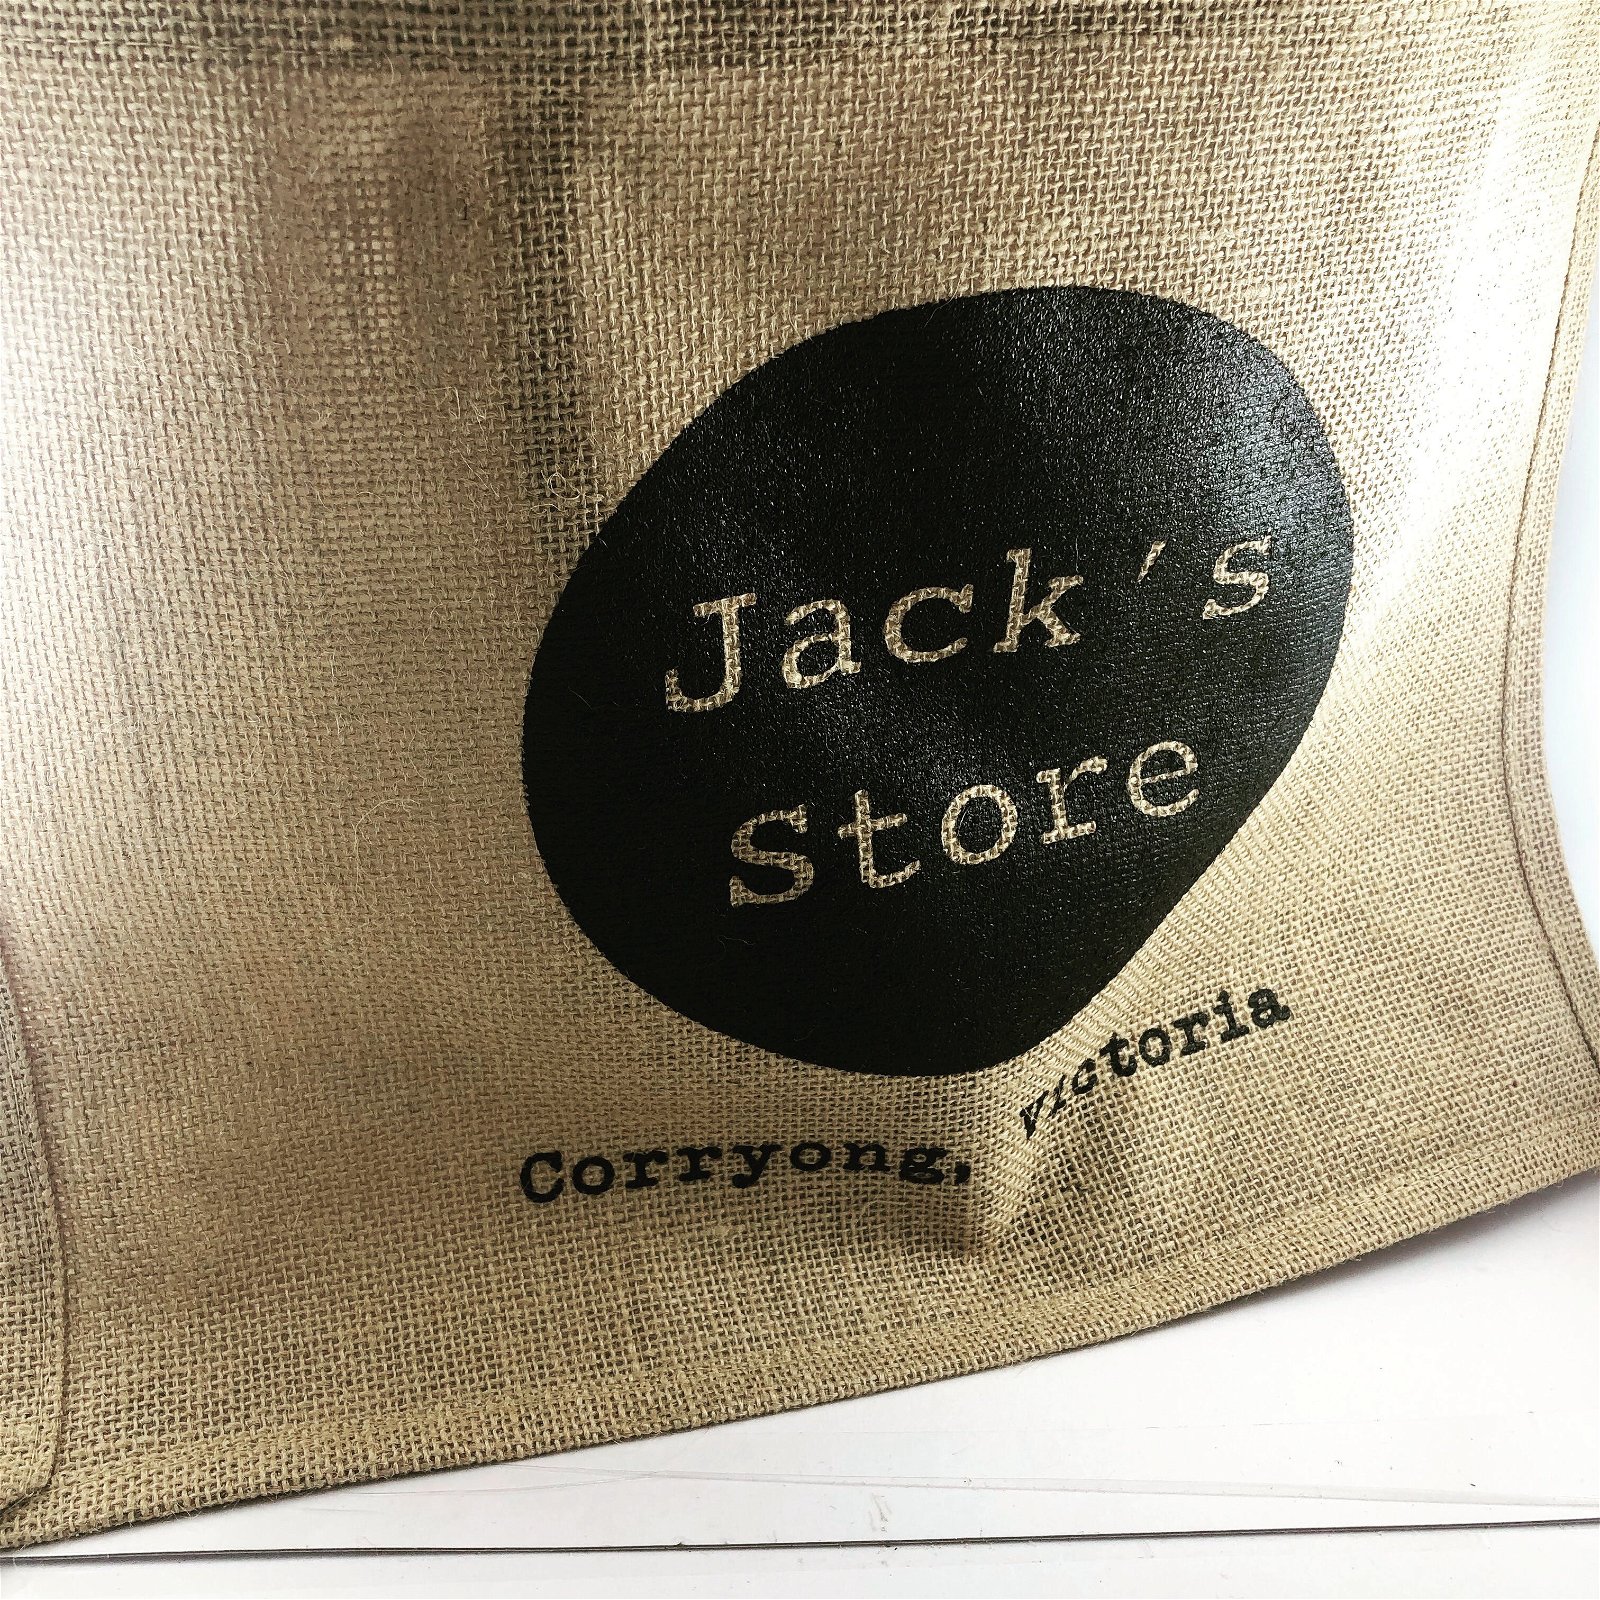 Jack's Store - Australia Accommodation